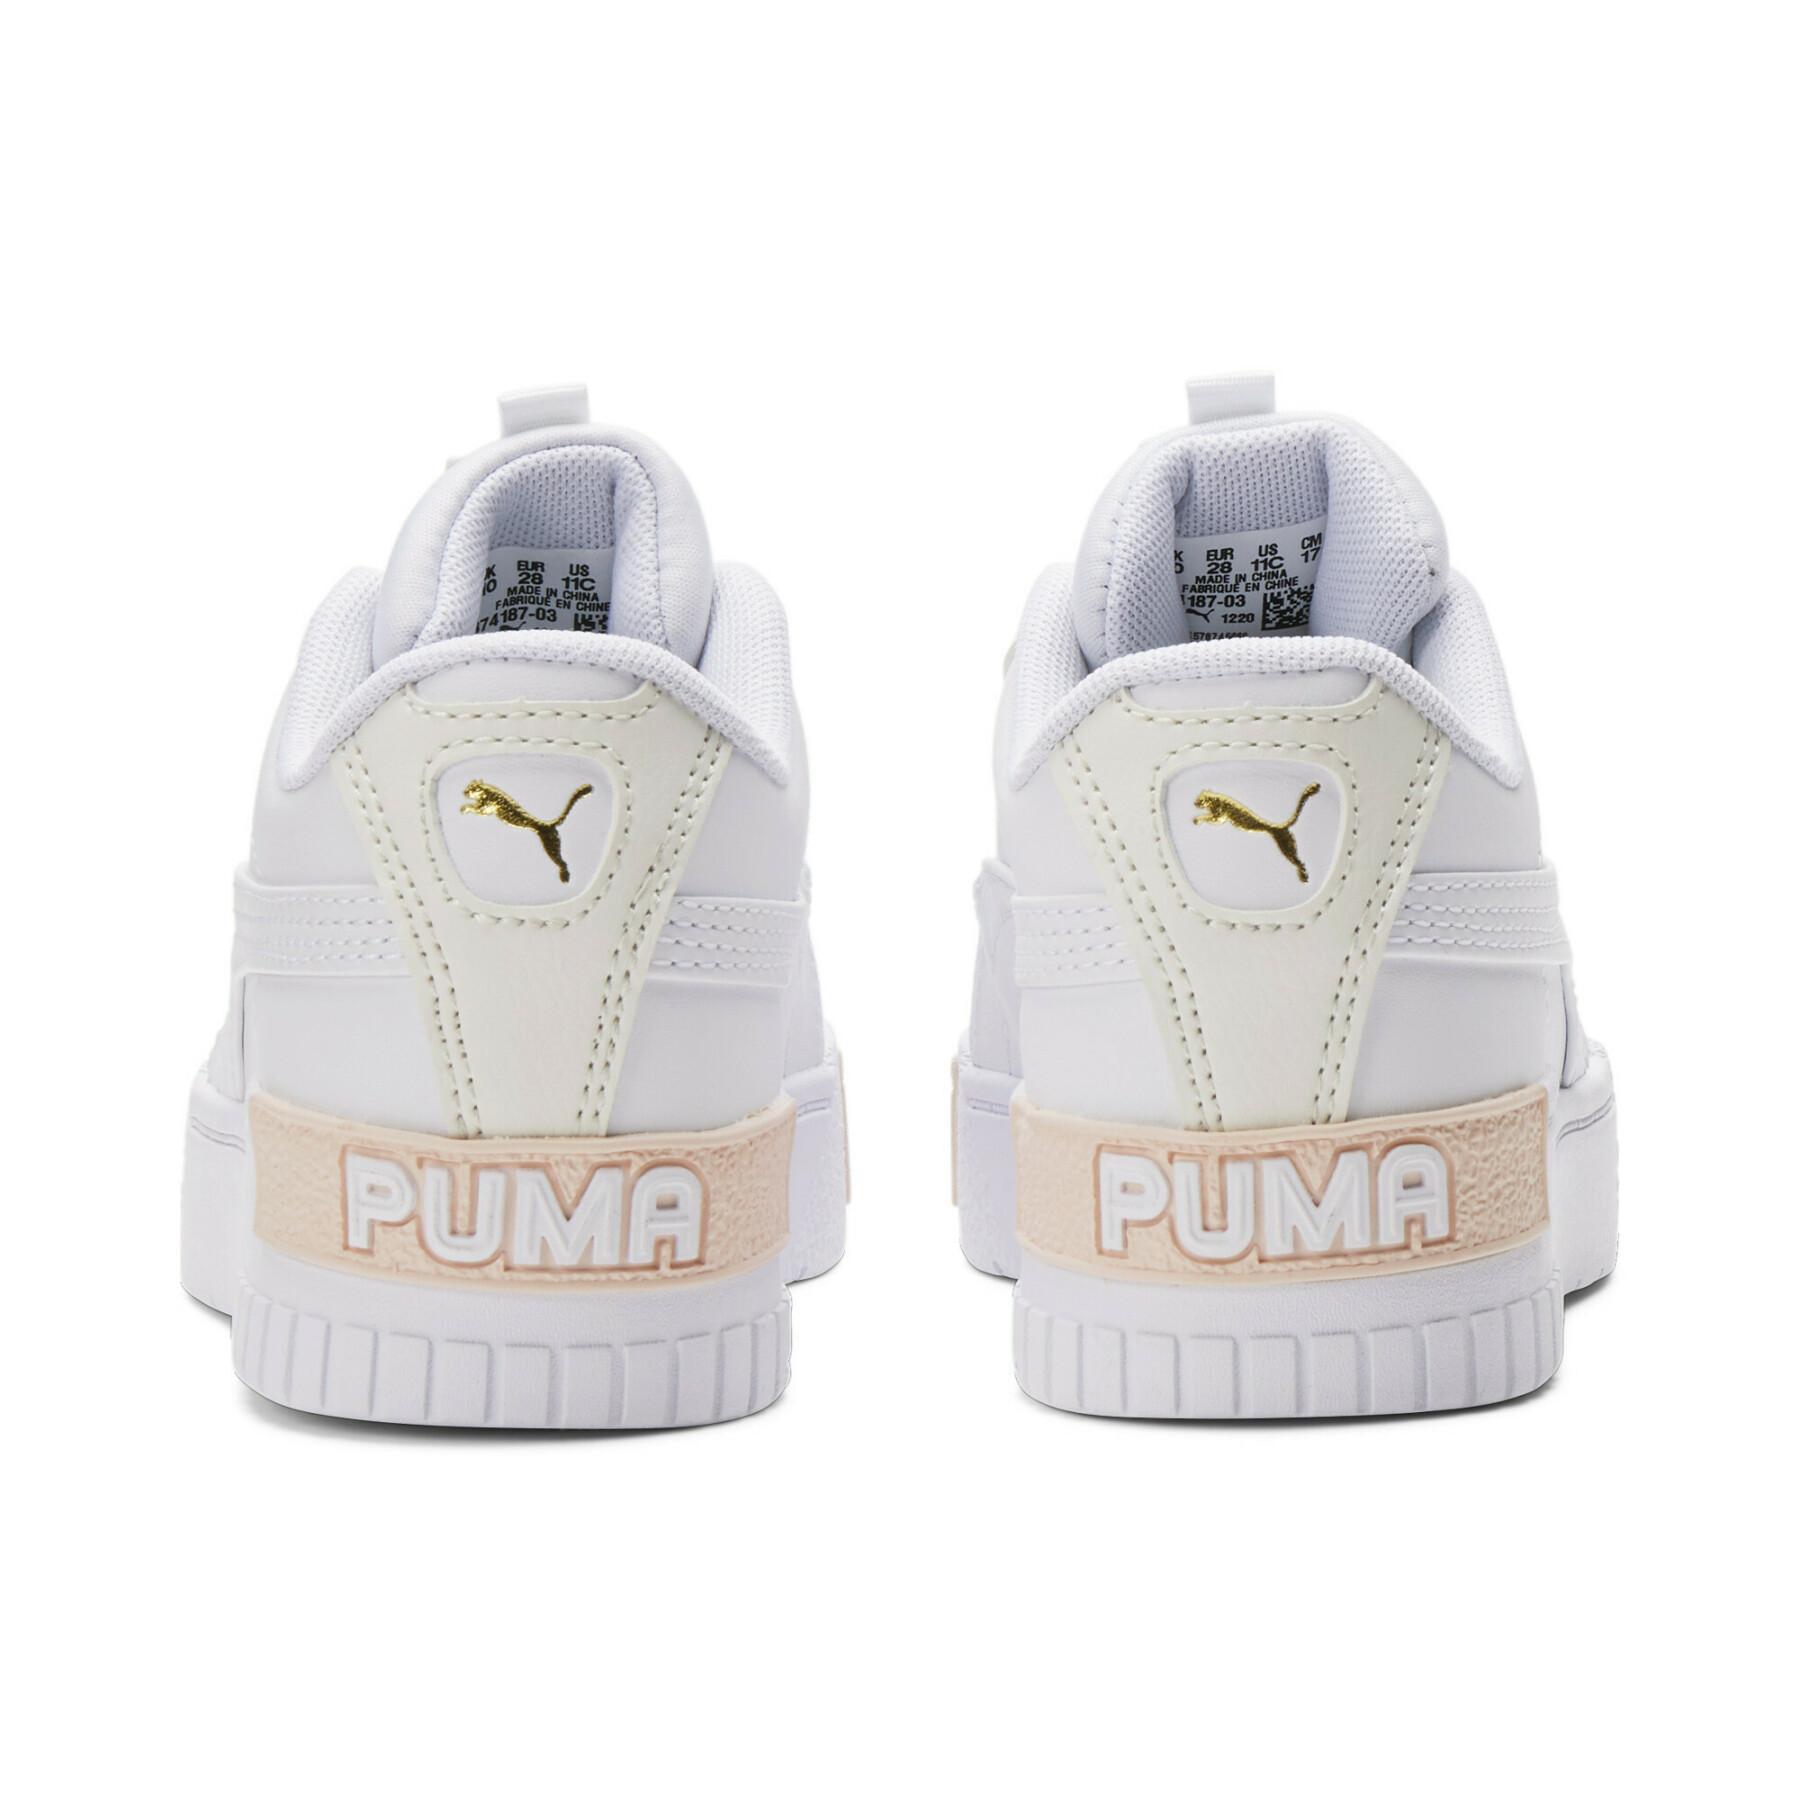 Schuhe für Mädchen Puma Cali Sport